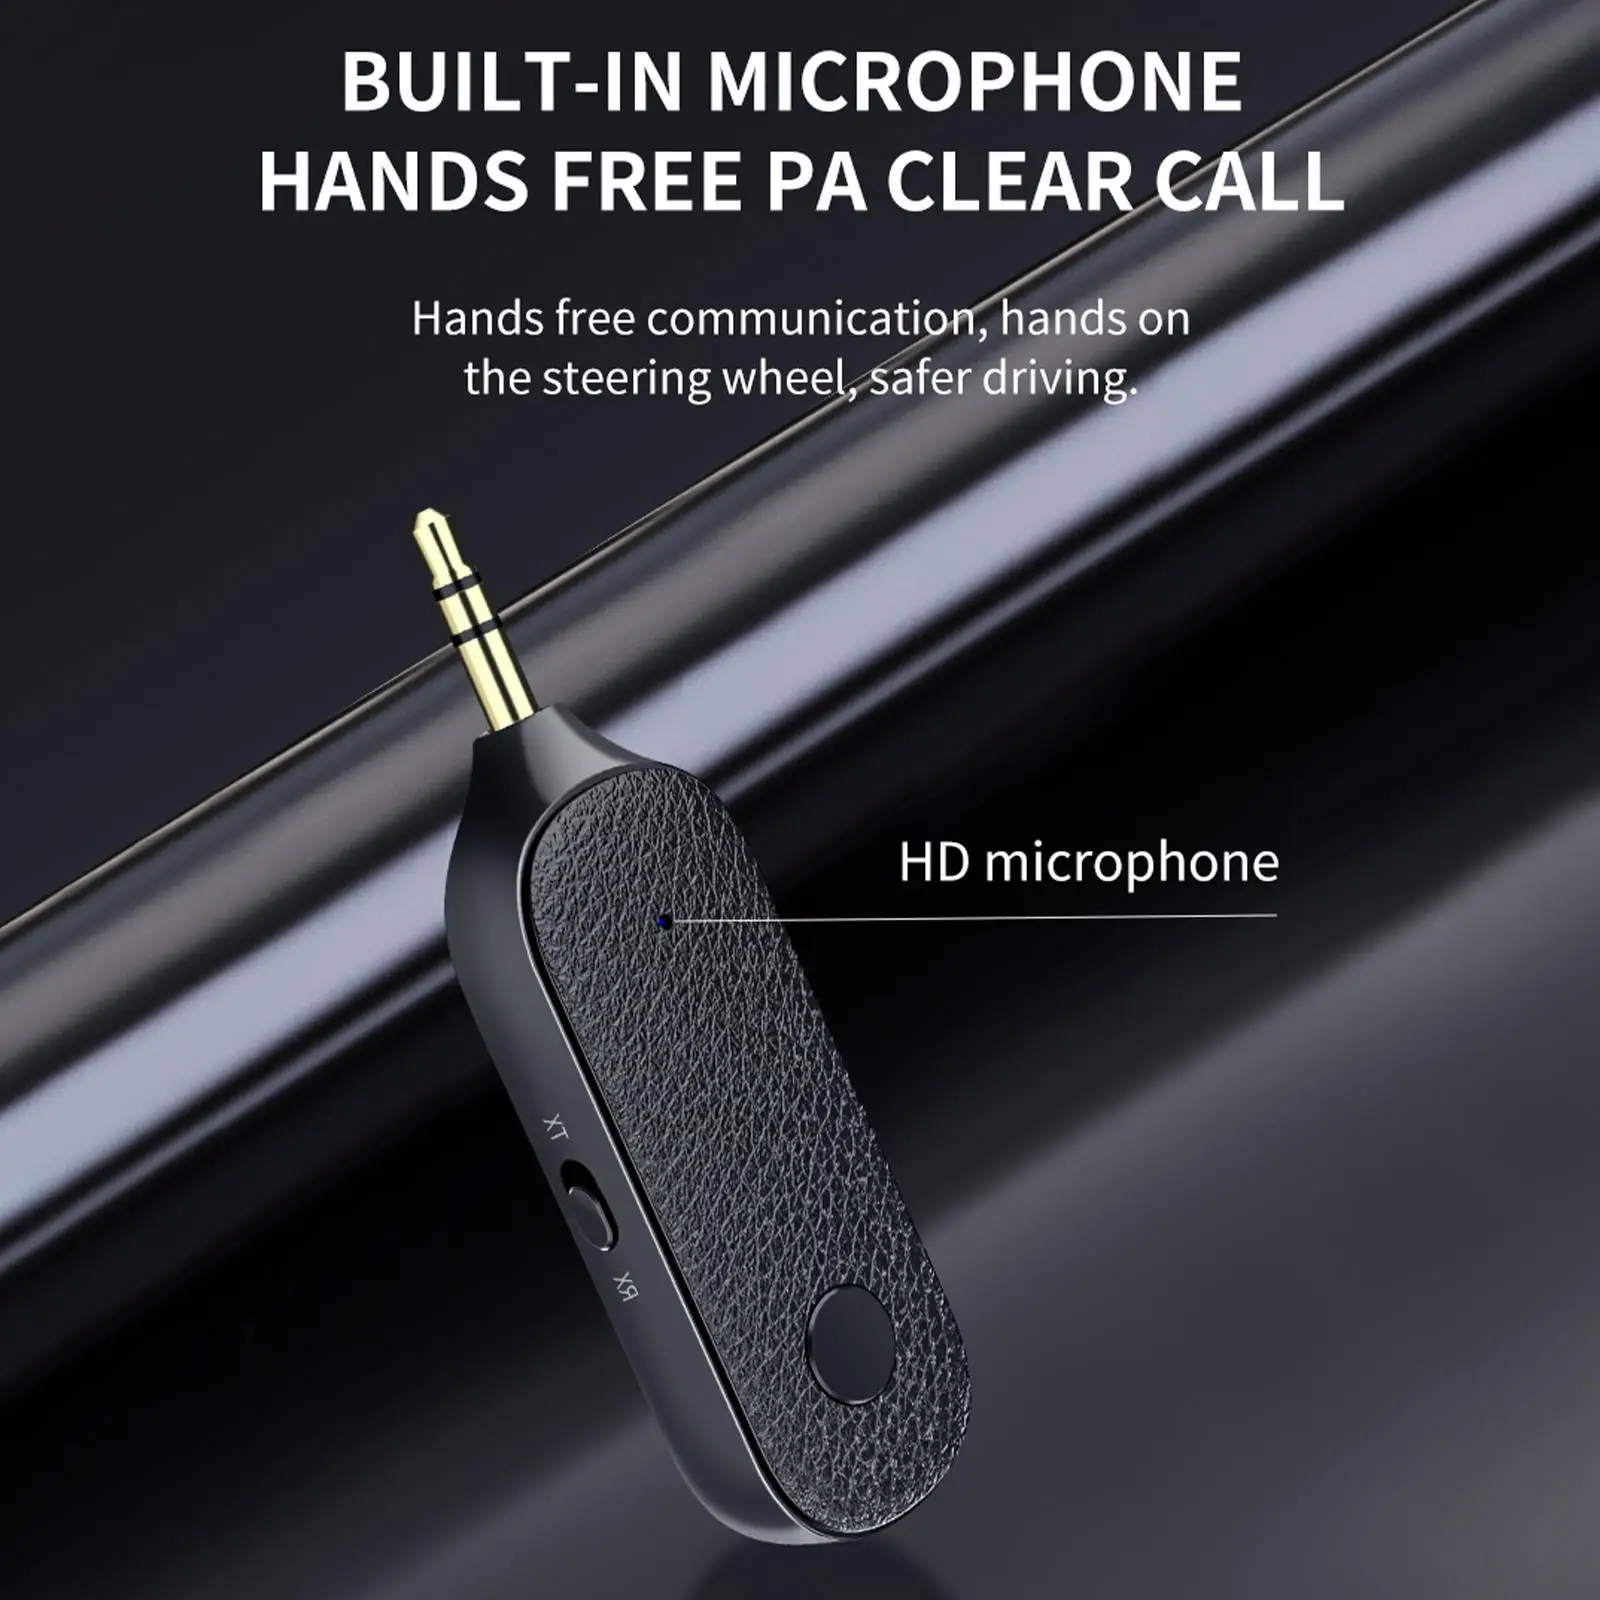 5.1 Transmitter Receiver for Car Support Hands Free Calling Audio Transmitter Receiver Adapter for Microphone